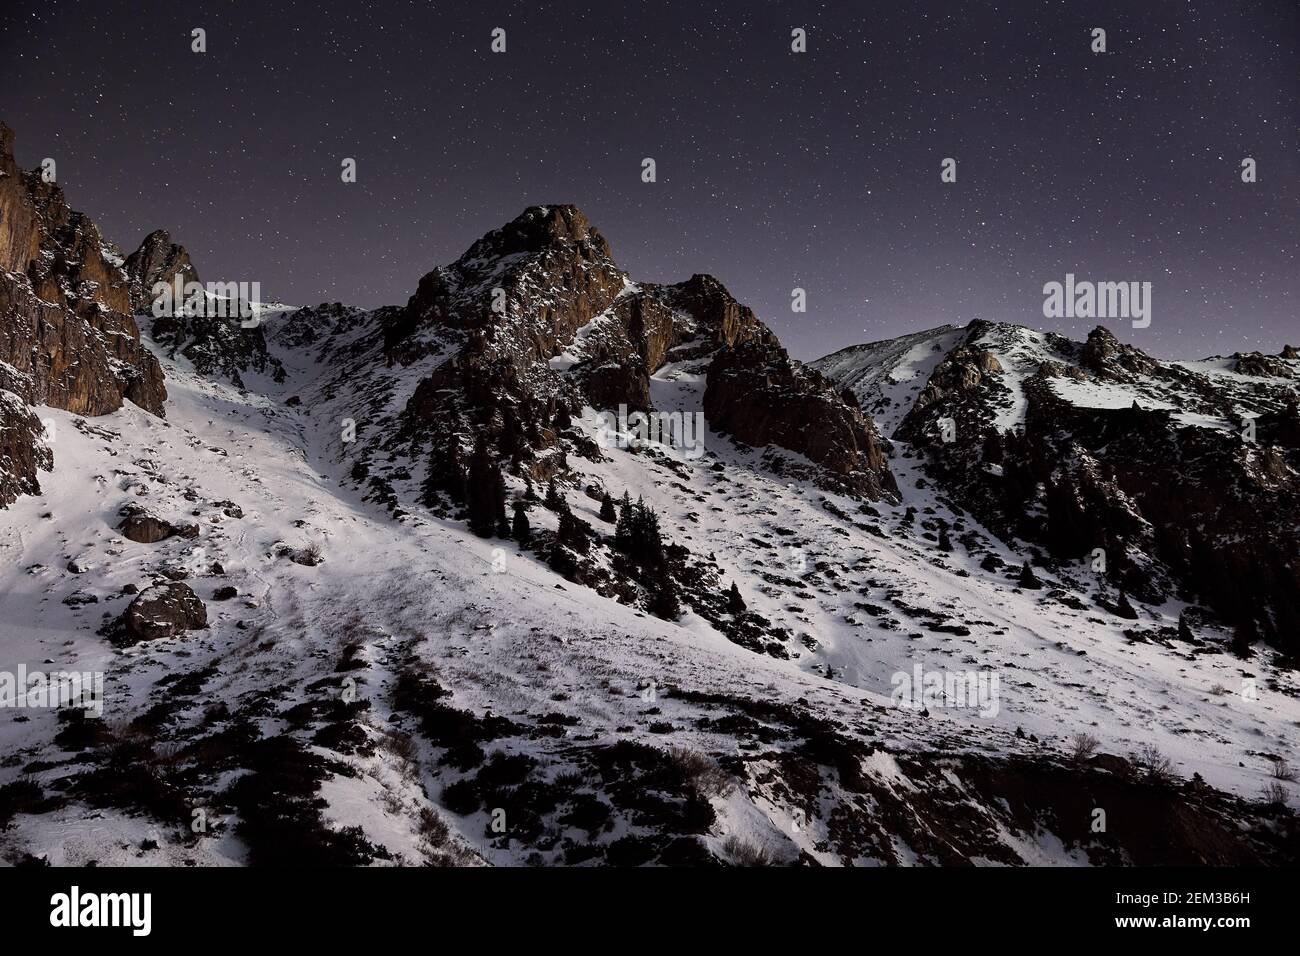 Dramatic landscape of mountain range at night sky with stars near Almaty, Kazakhstan Stock Photo